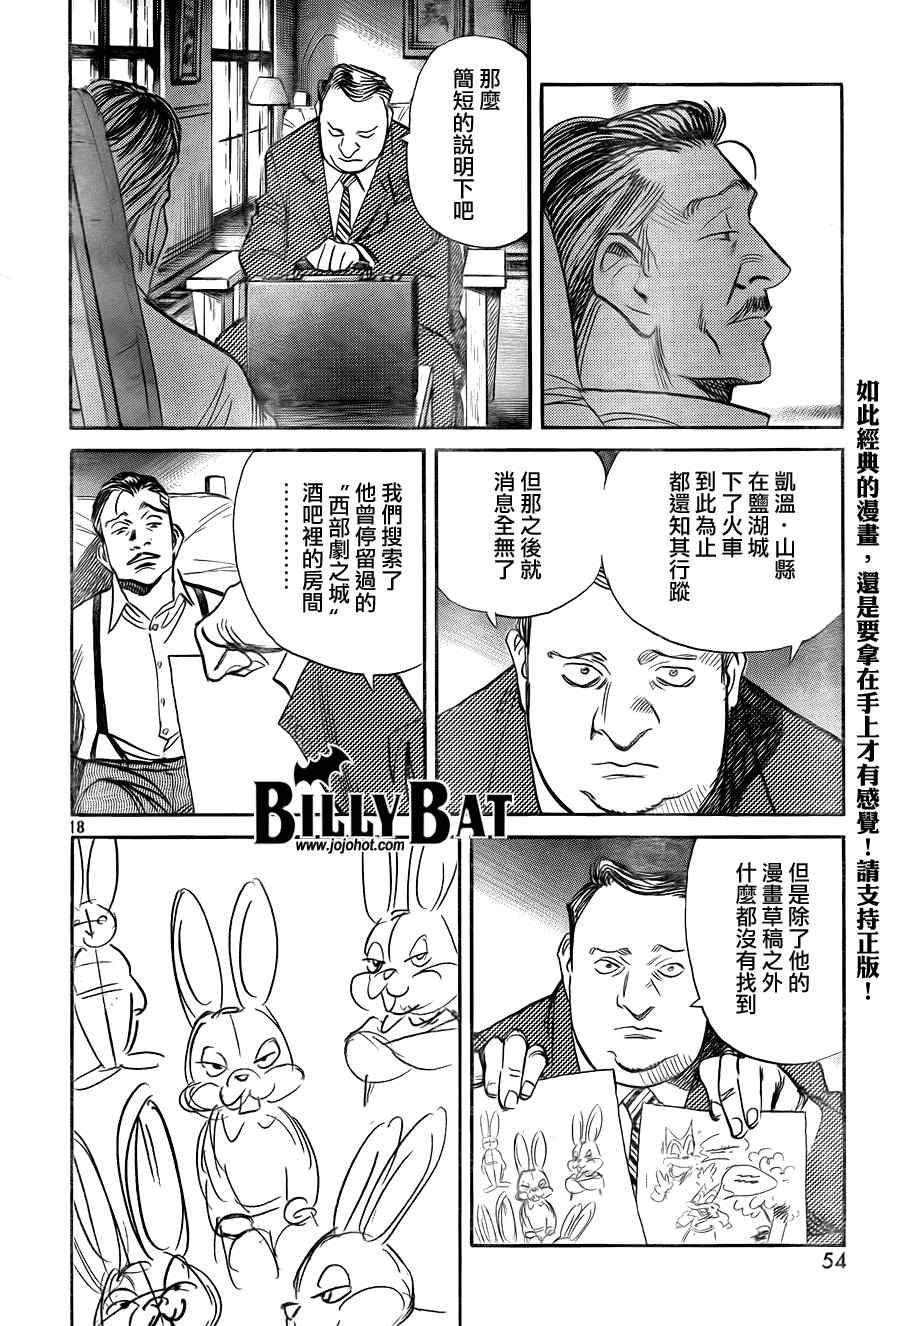 Billy_Bat - 第47話 - 4